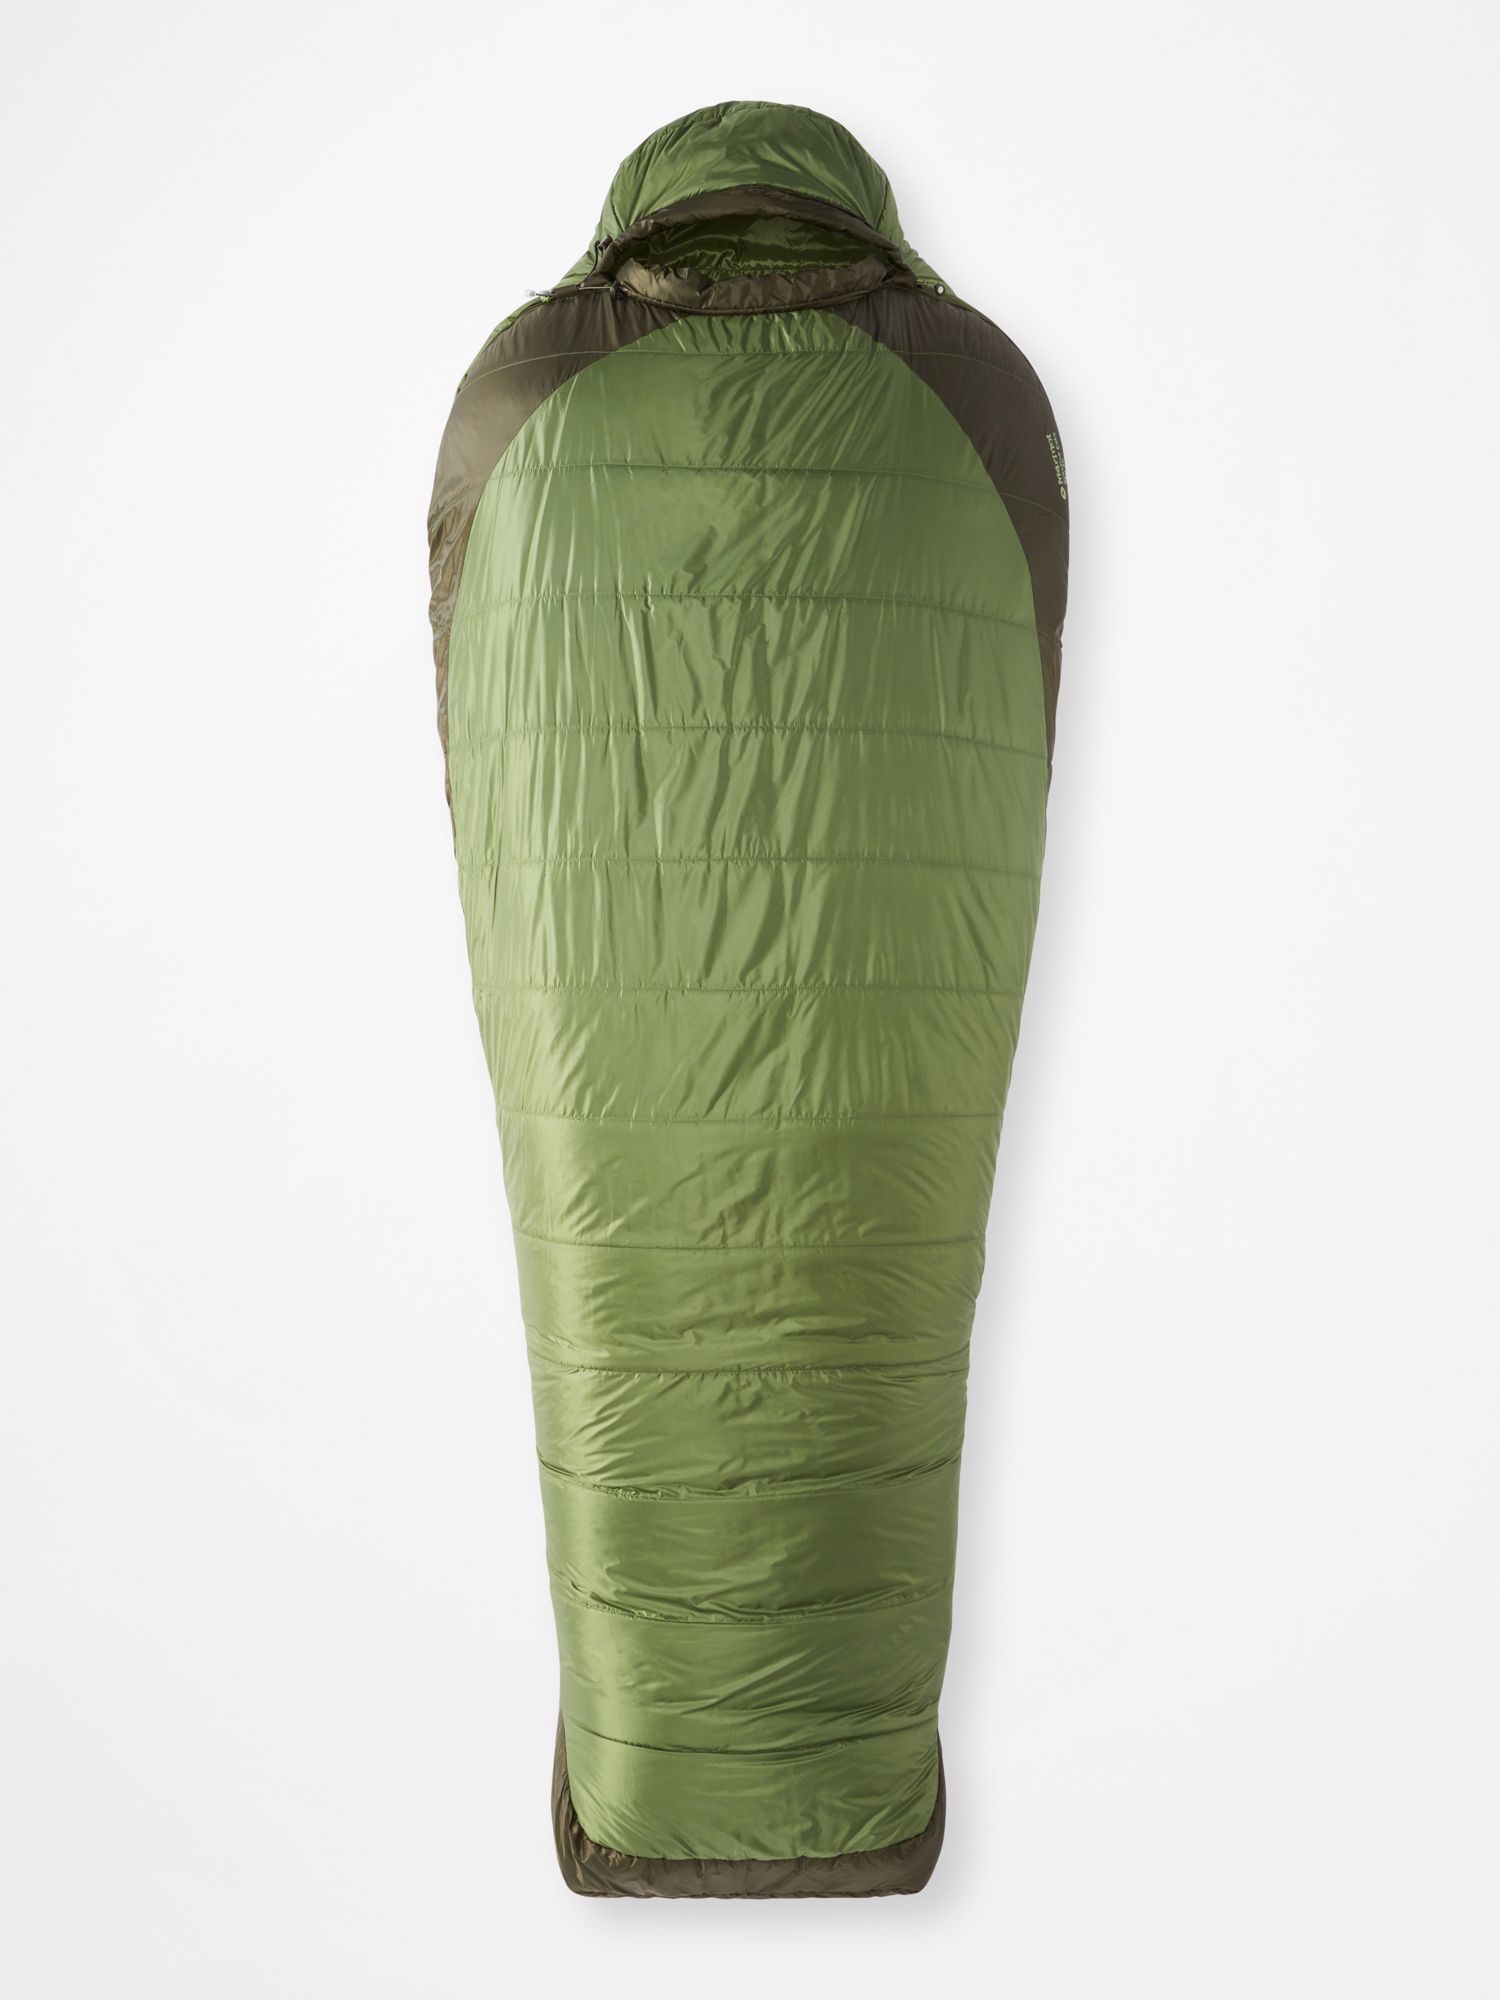 Trestles Elite Eco 30 Long X Wide Sleeping Bag | Marmot